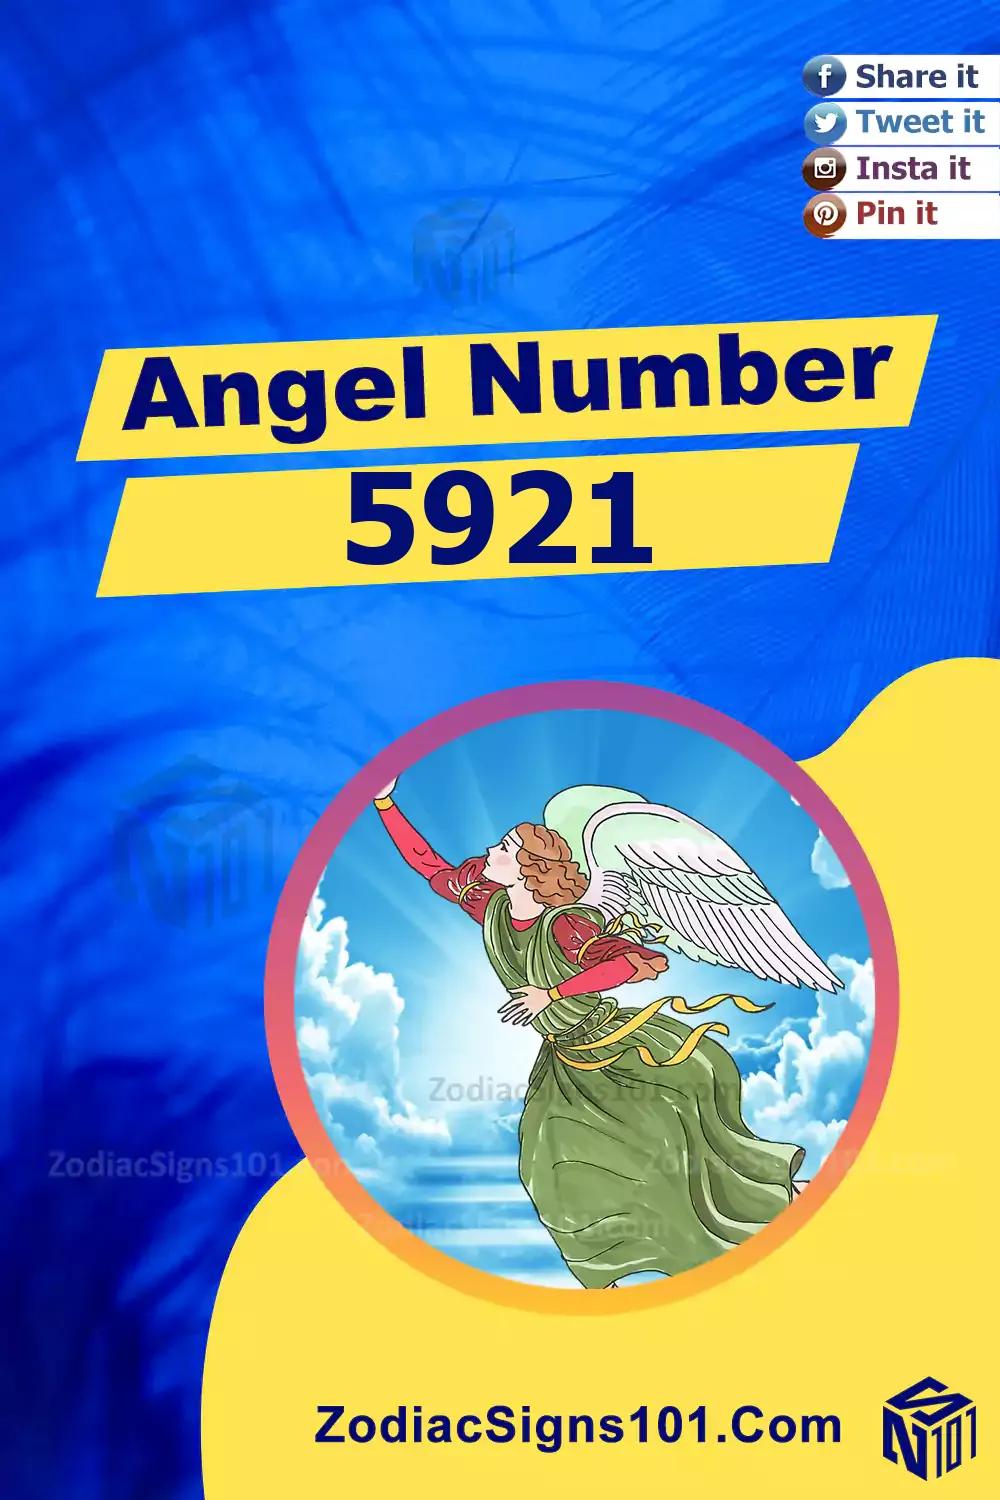 5921-Angel-Number-Meaning.jpg